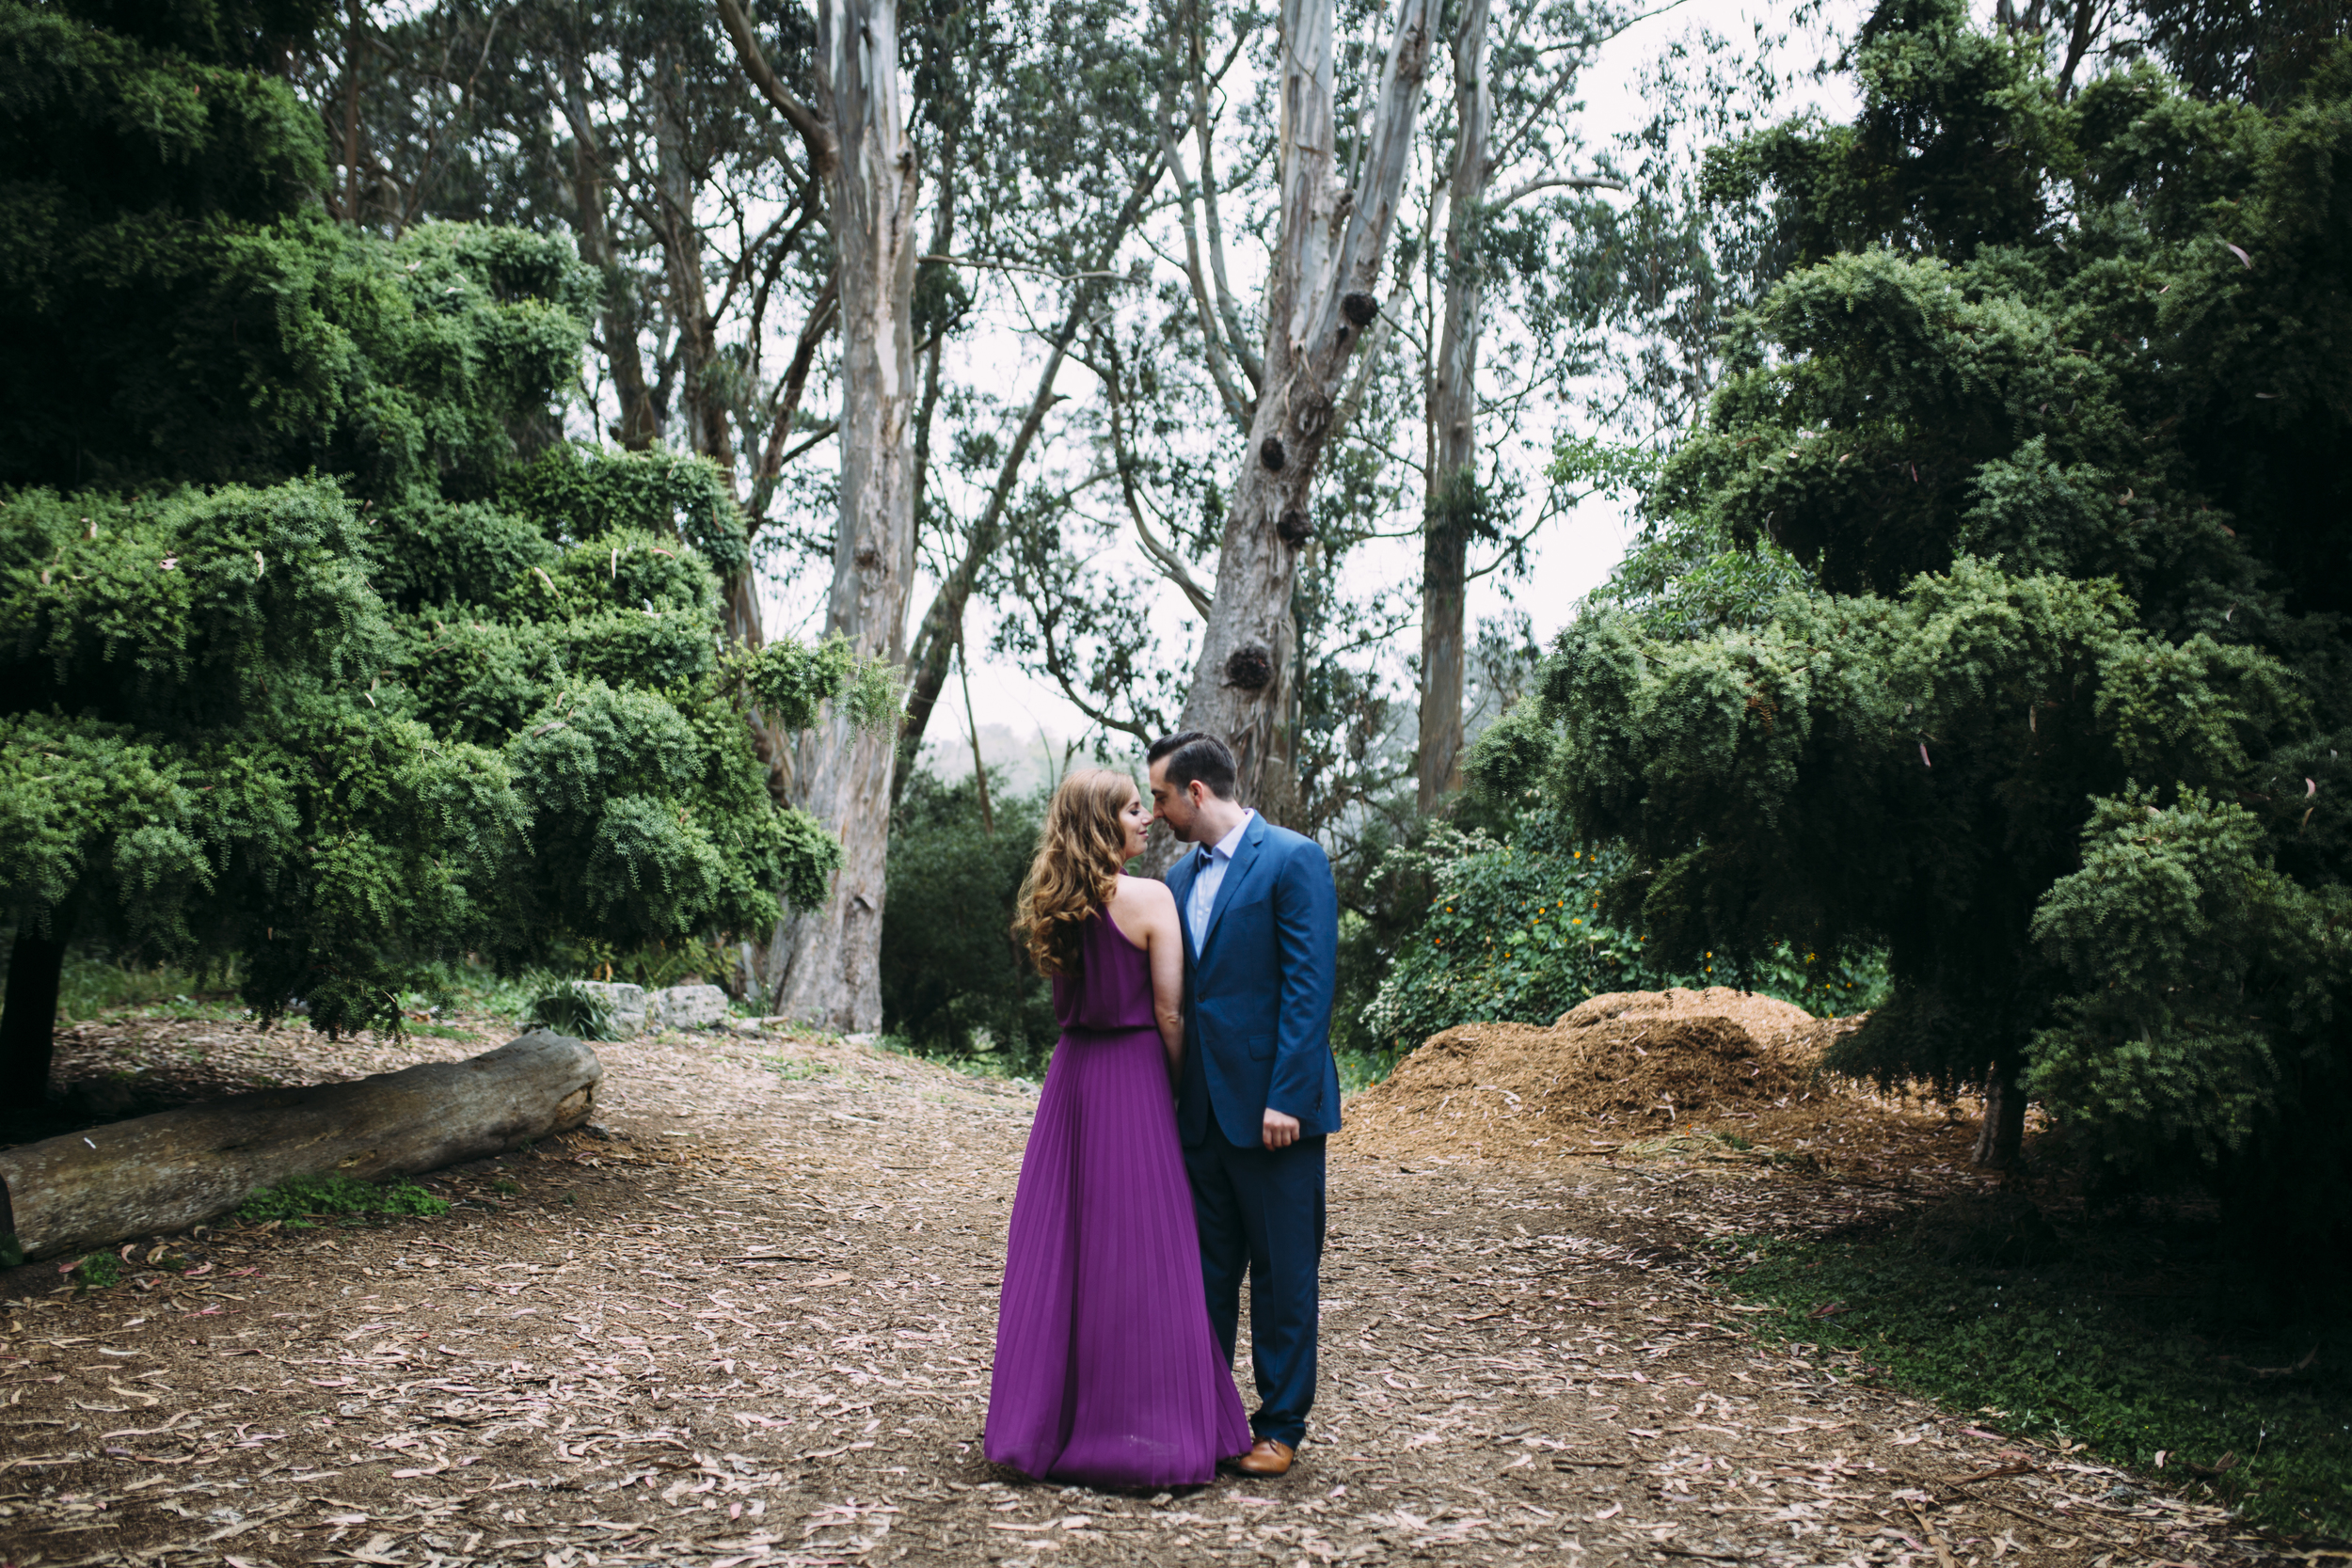  Nataly Zigdon Photography | San Francisco Wedding Photographer | Golden Gate Park | Engagement Session 